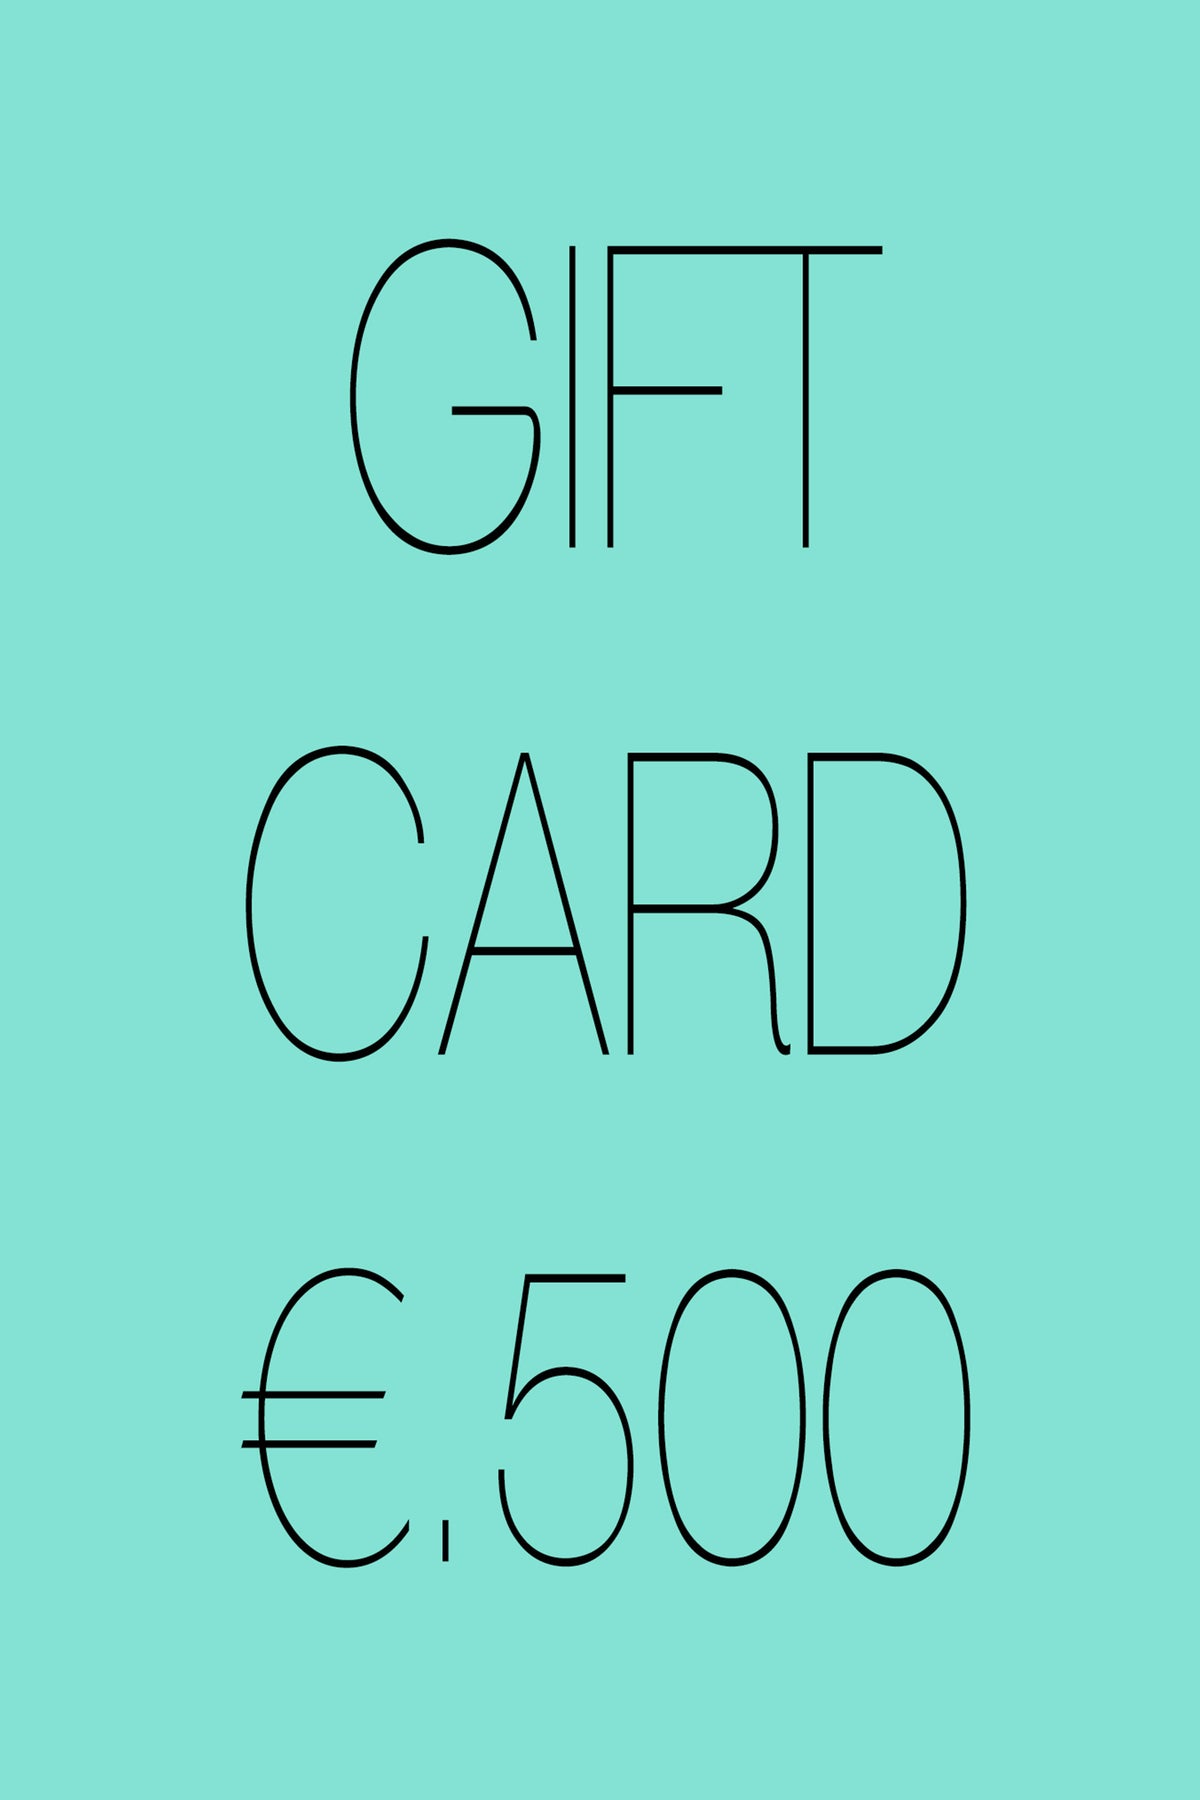 GIFT CARD €500.00